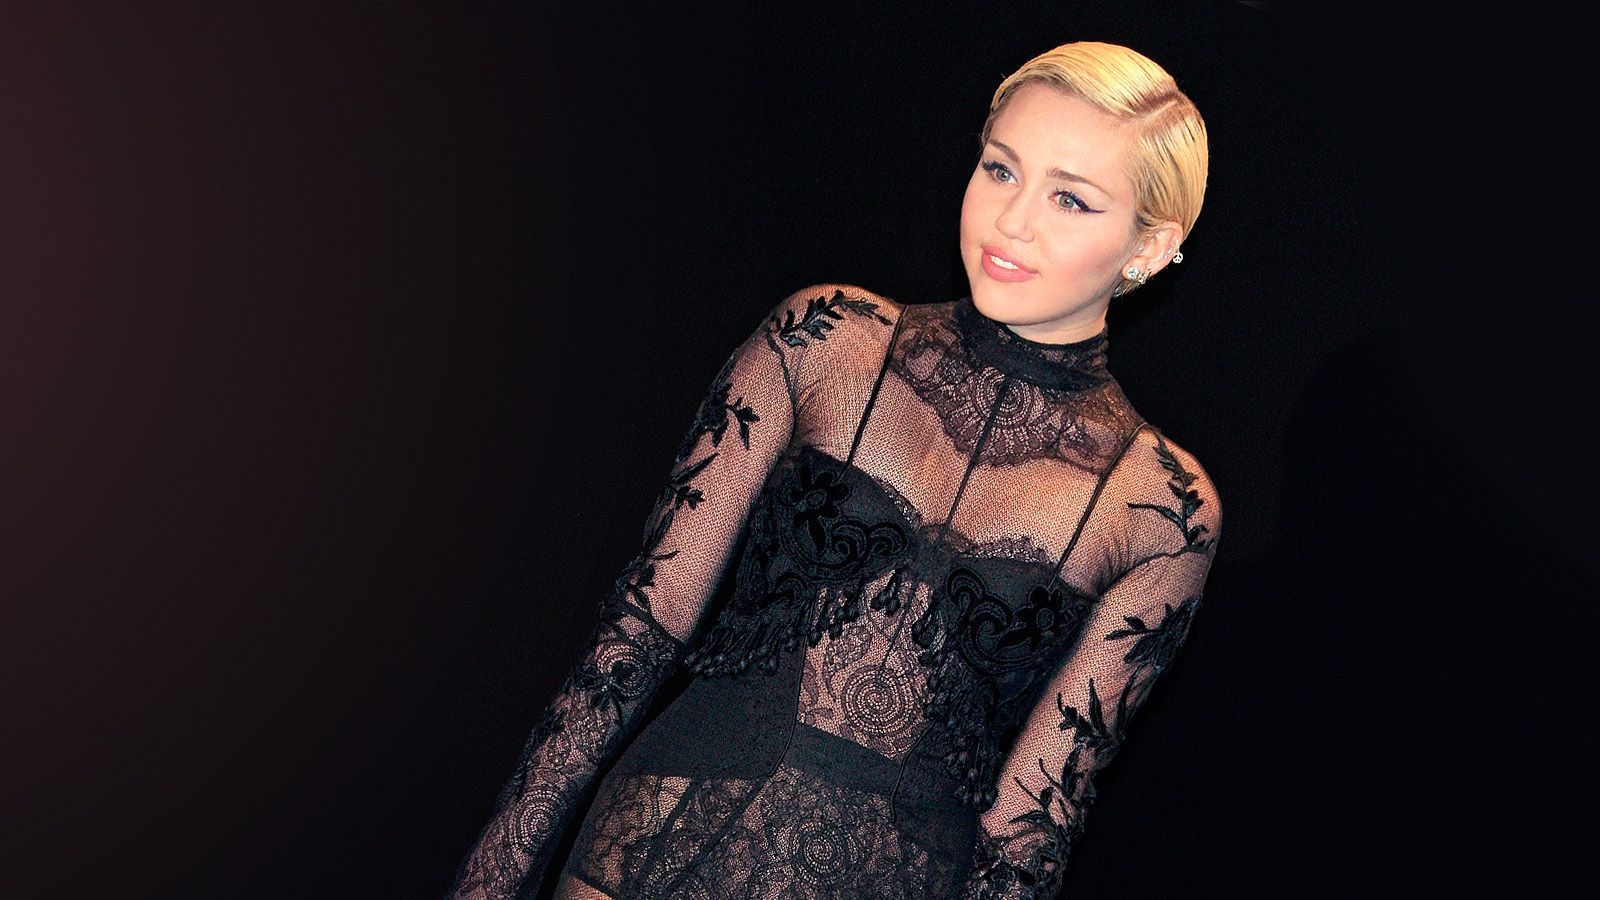 Profile image - Miley Cyrus